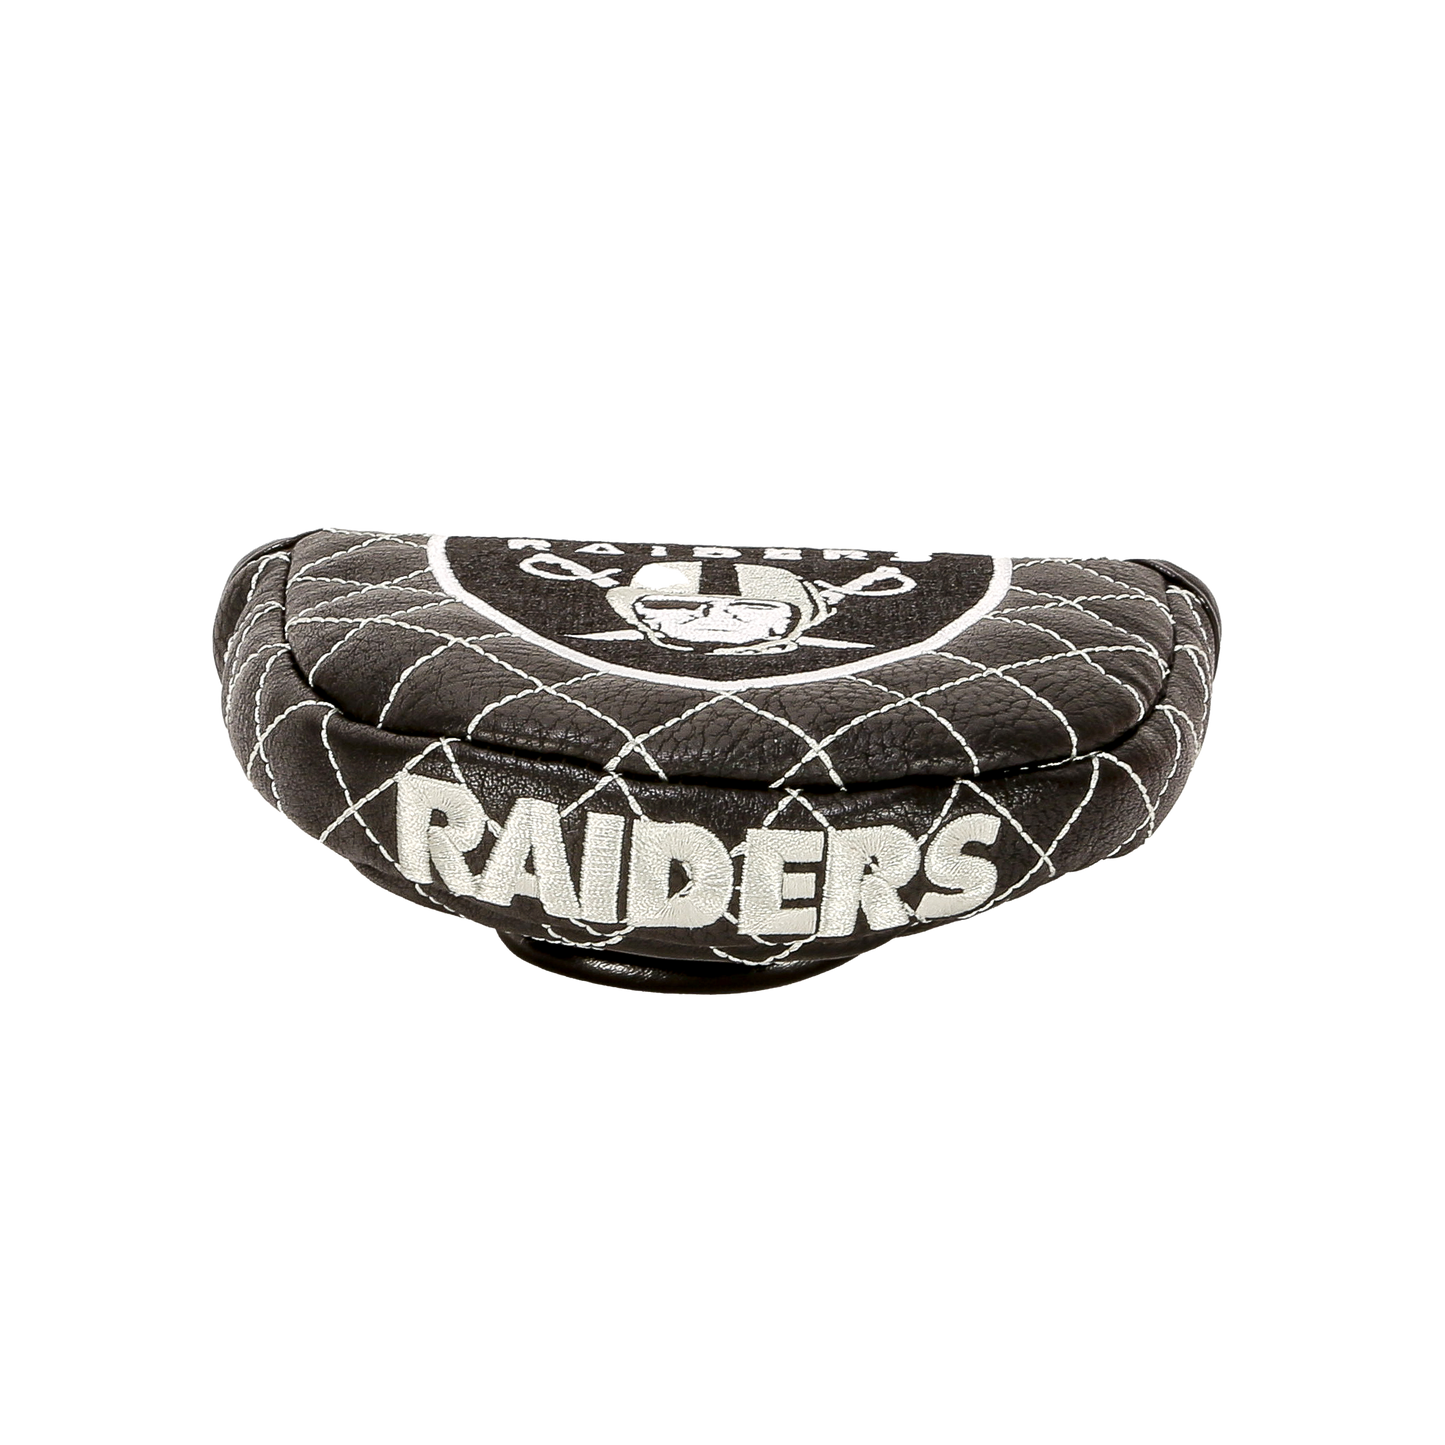 Las Vegas "Raiders" Mallet Putter Cover